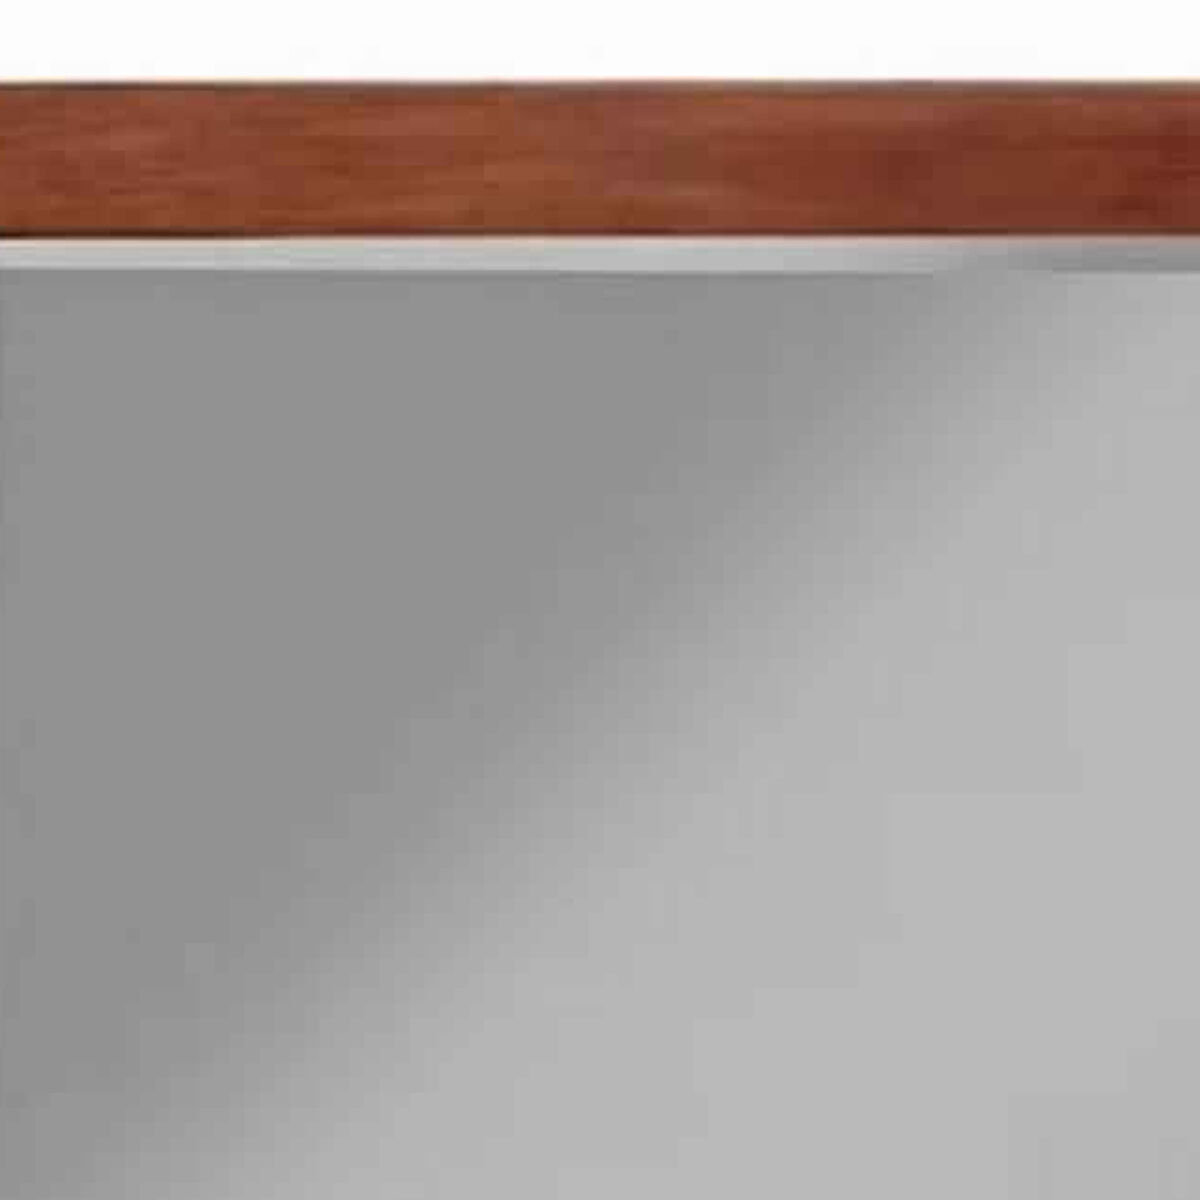 Wooden Frame Dresser Mirror with Natural Grain Details, Cherry Brown